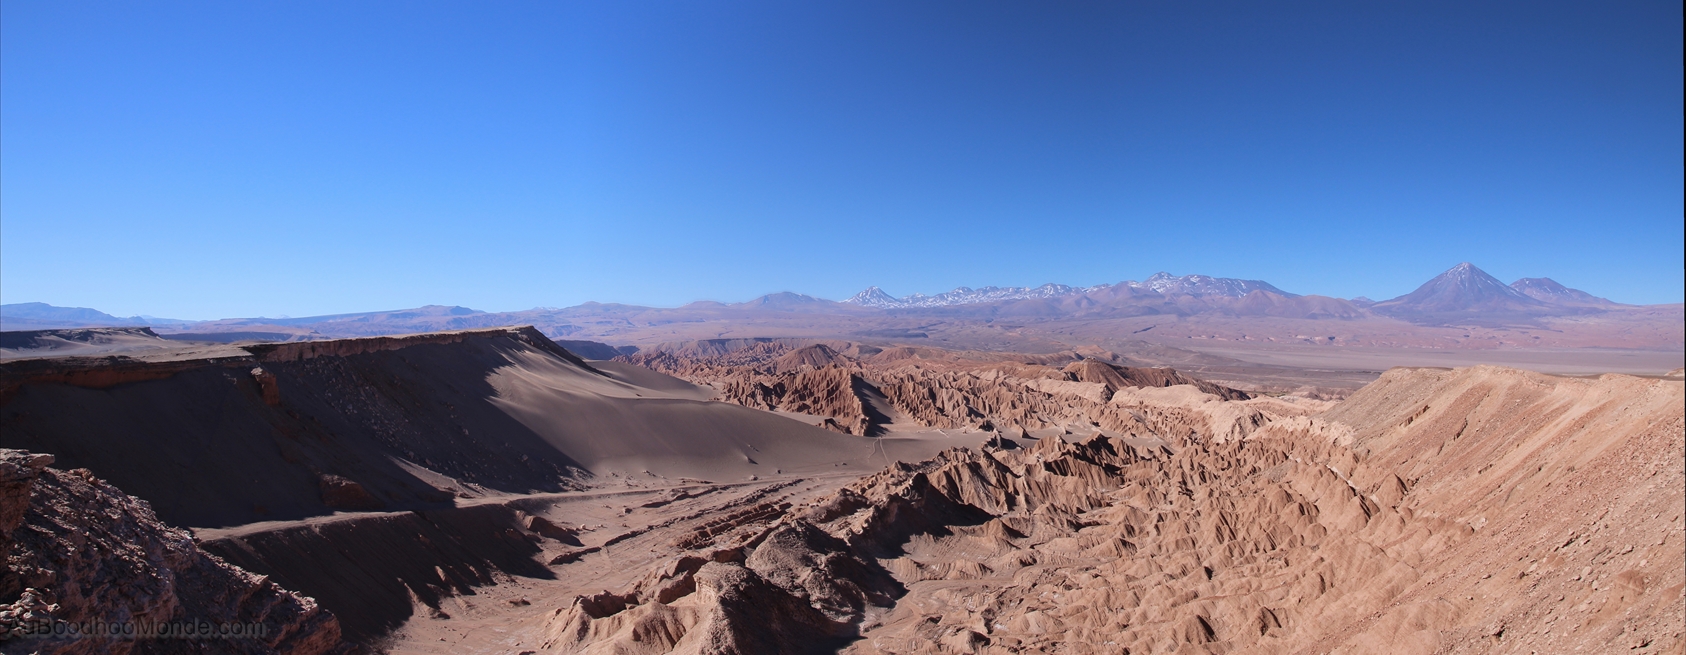 Chili - Vallee de la Muerte Atacama desert